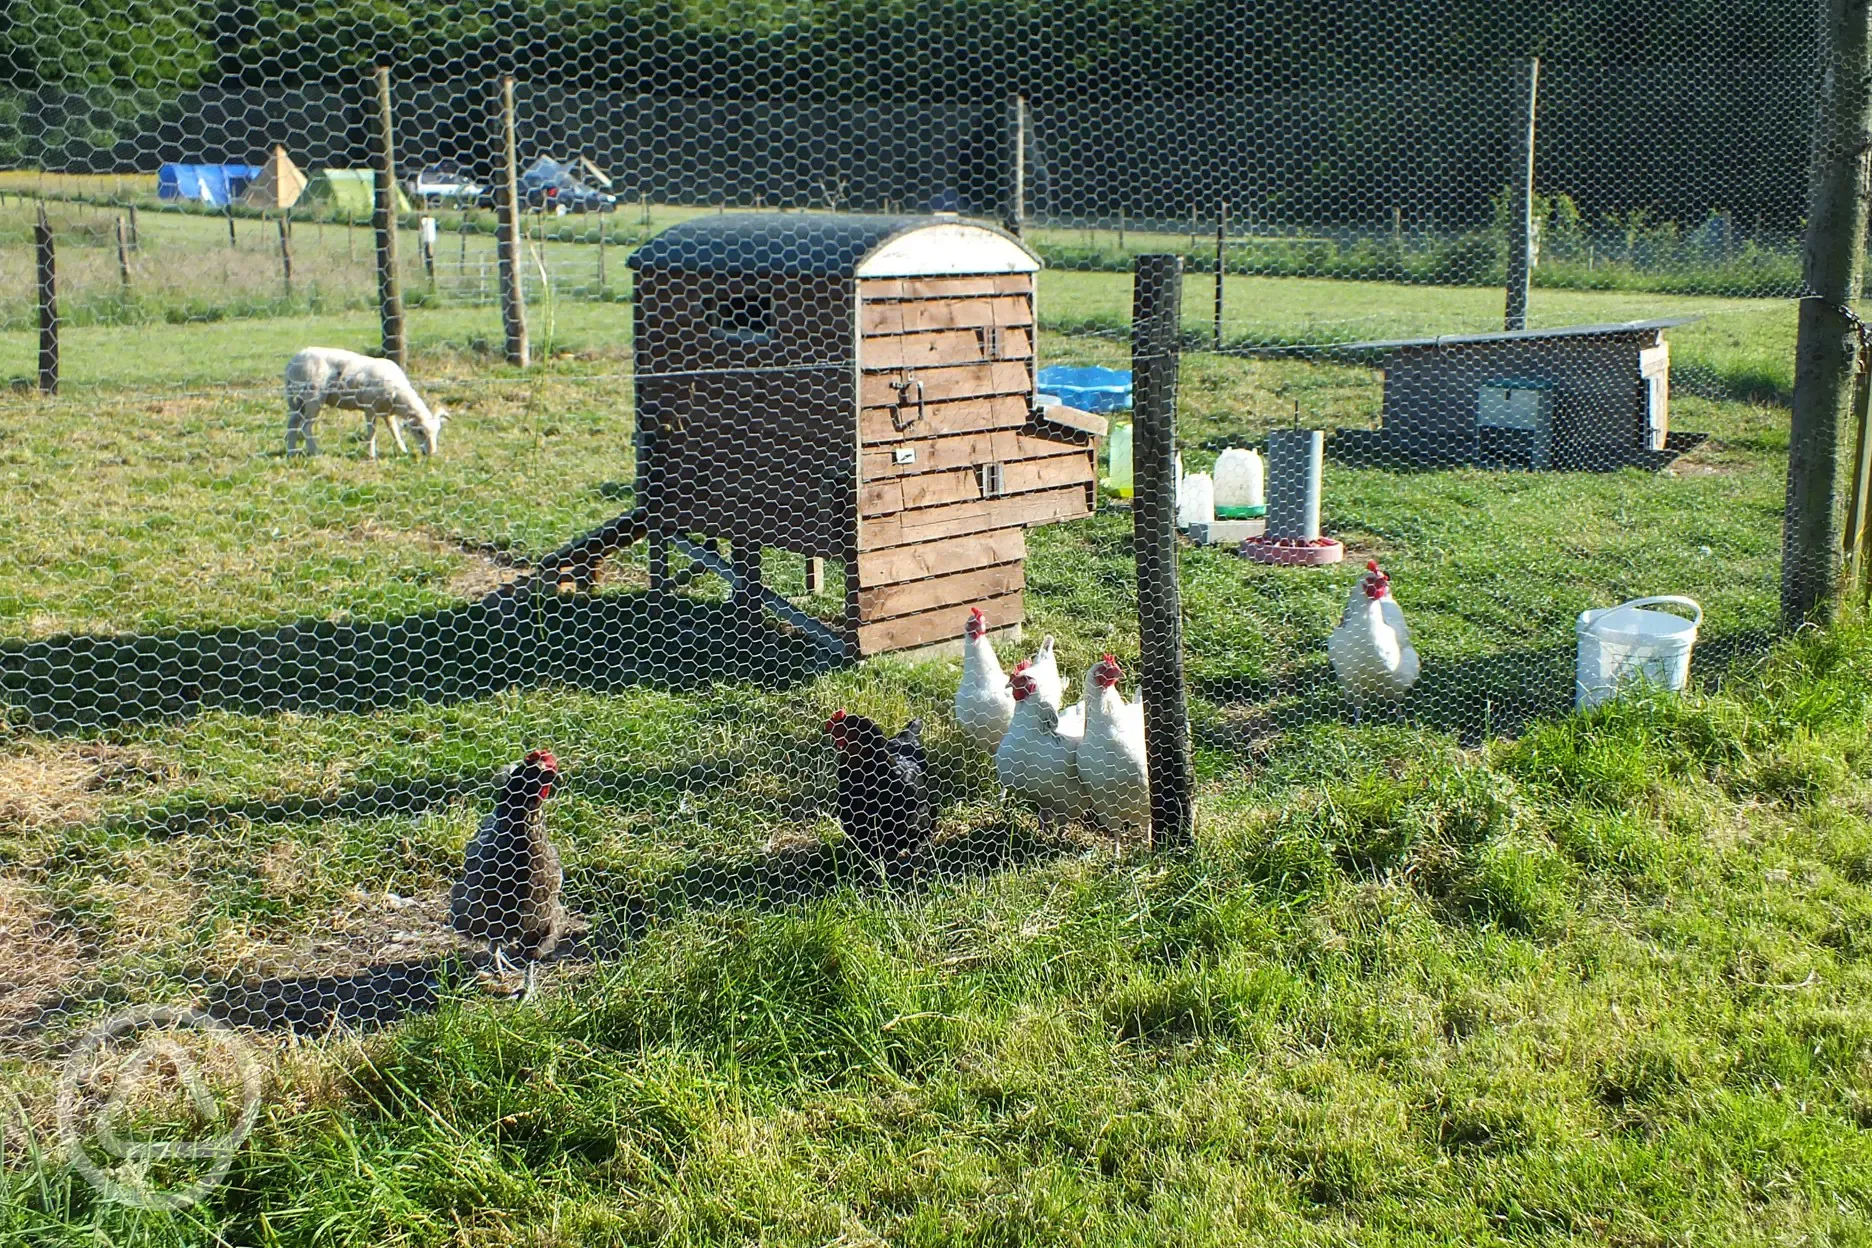 Farm animals on site